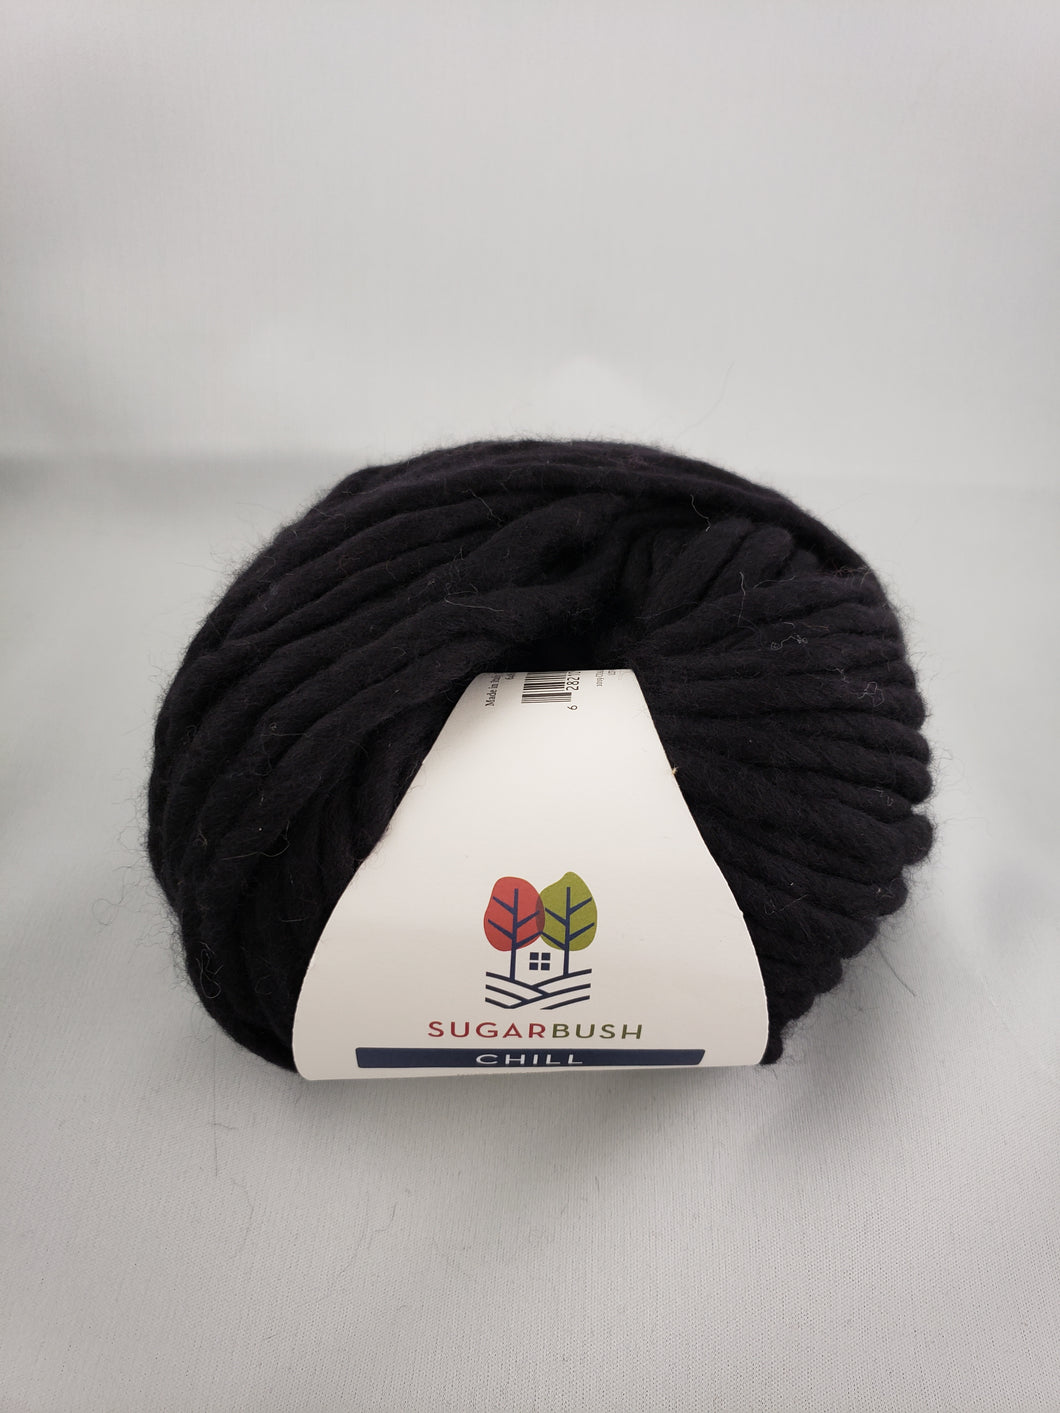 Evergreen Toque - Knitting Kits - Sugar Bush Chill